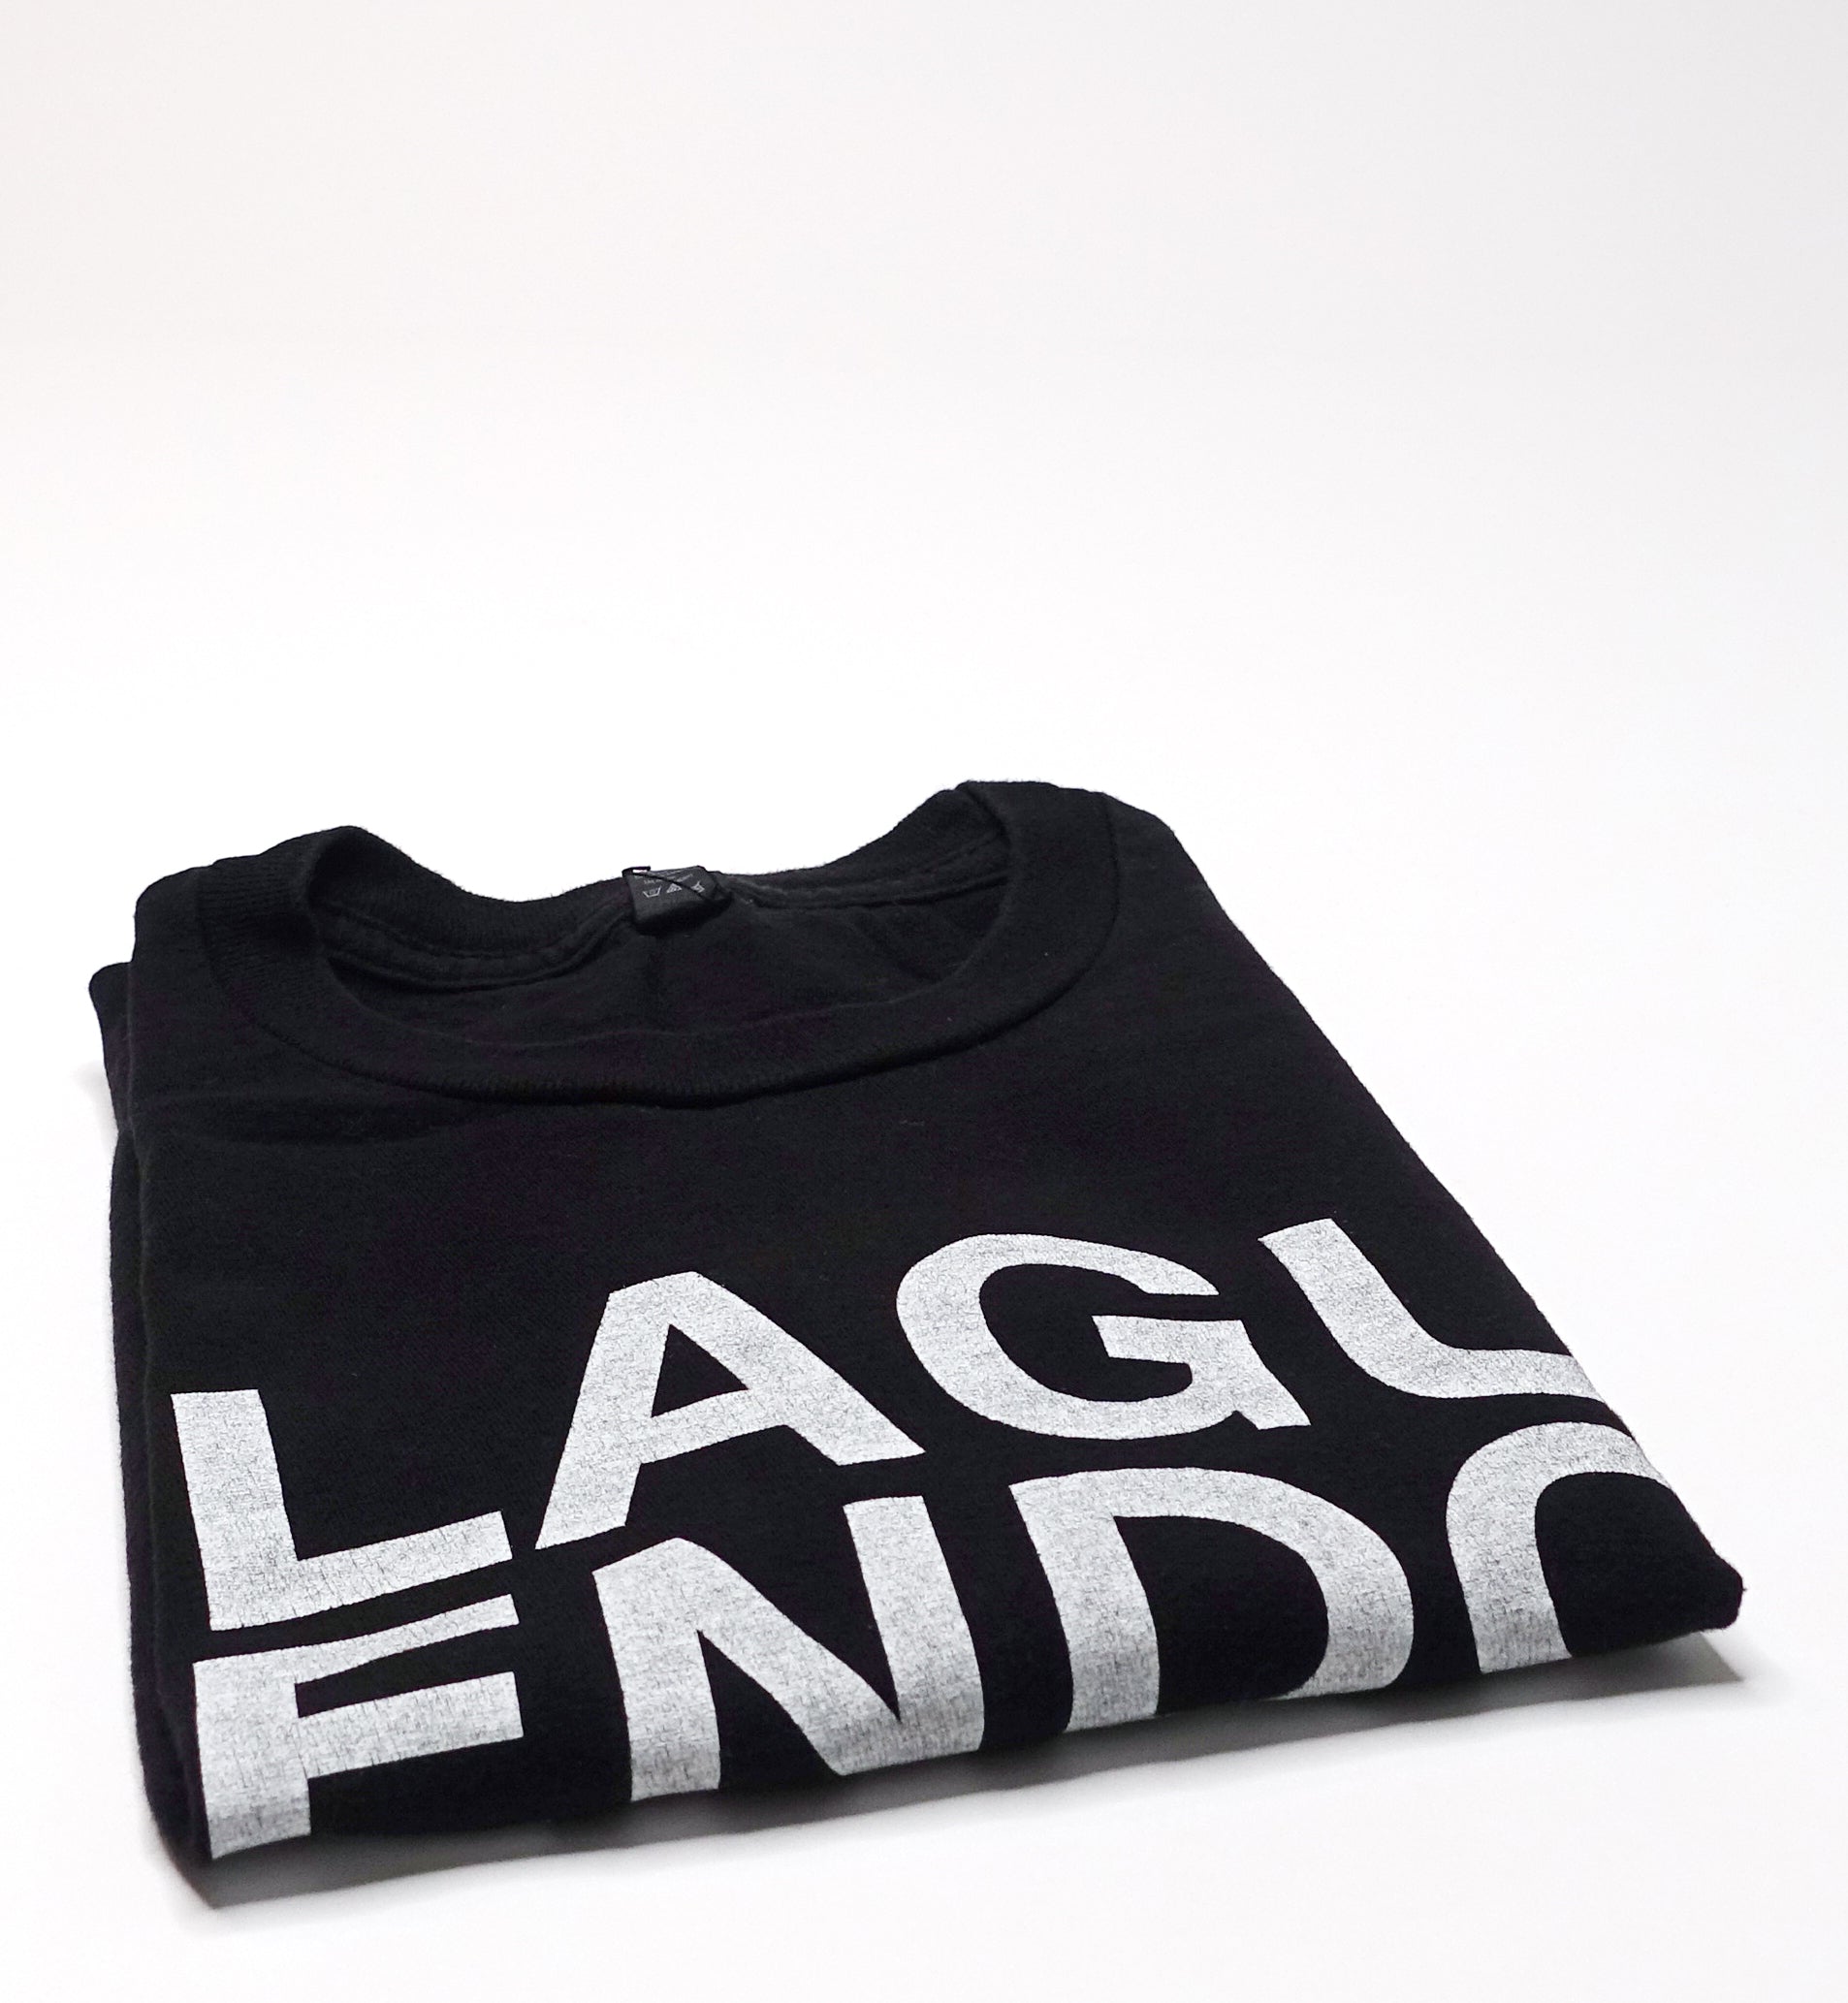 Plague Vendor - White On Black Logo 2015 Tour Shirt Size Small